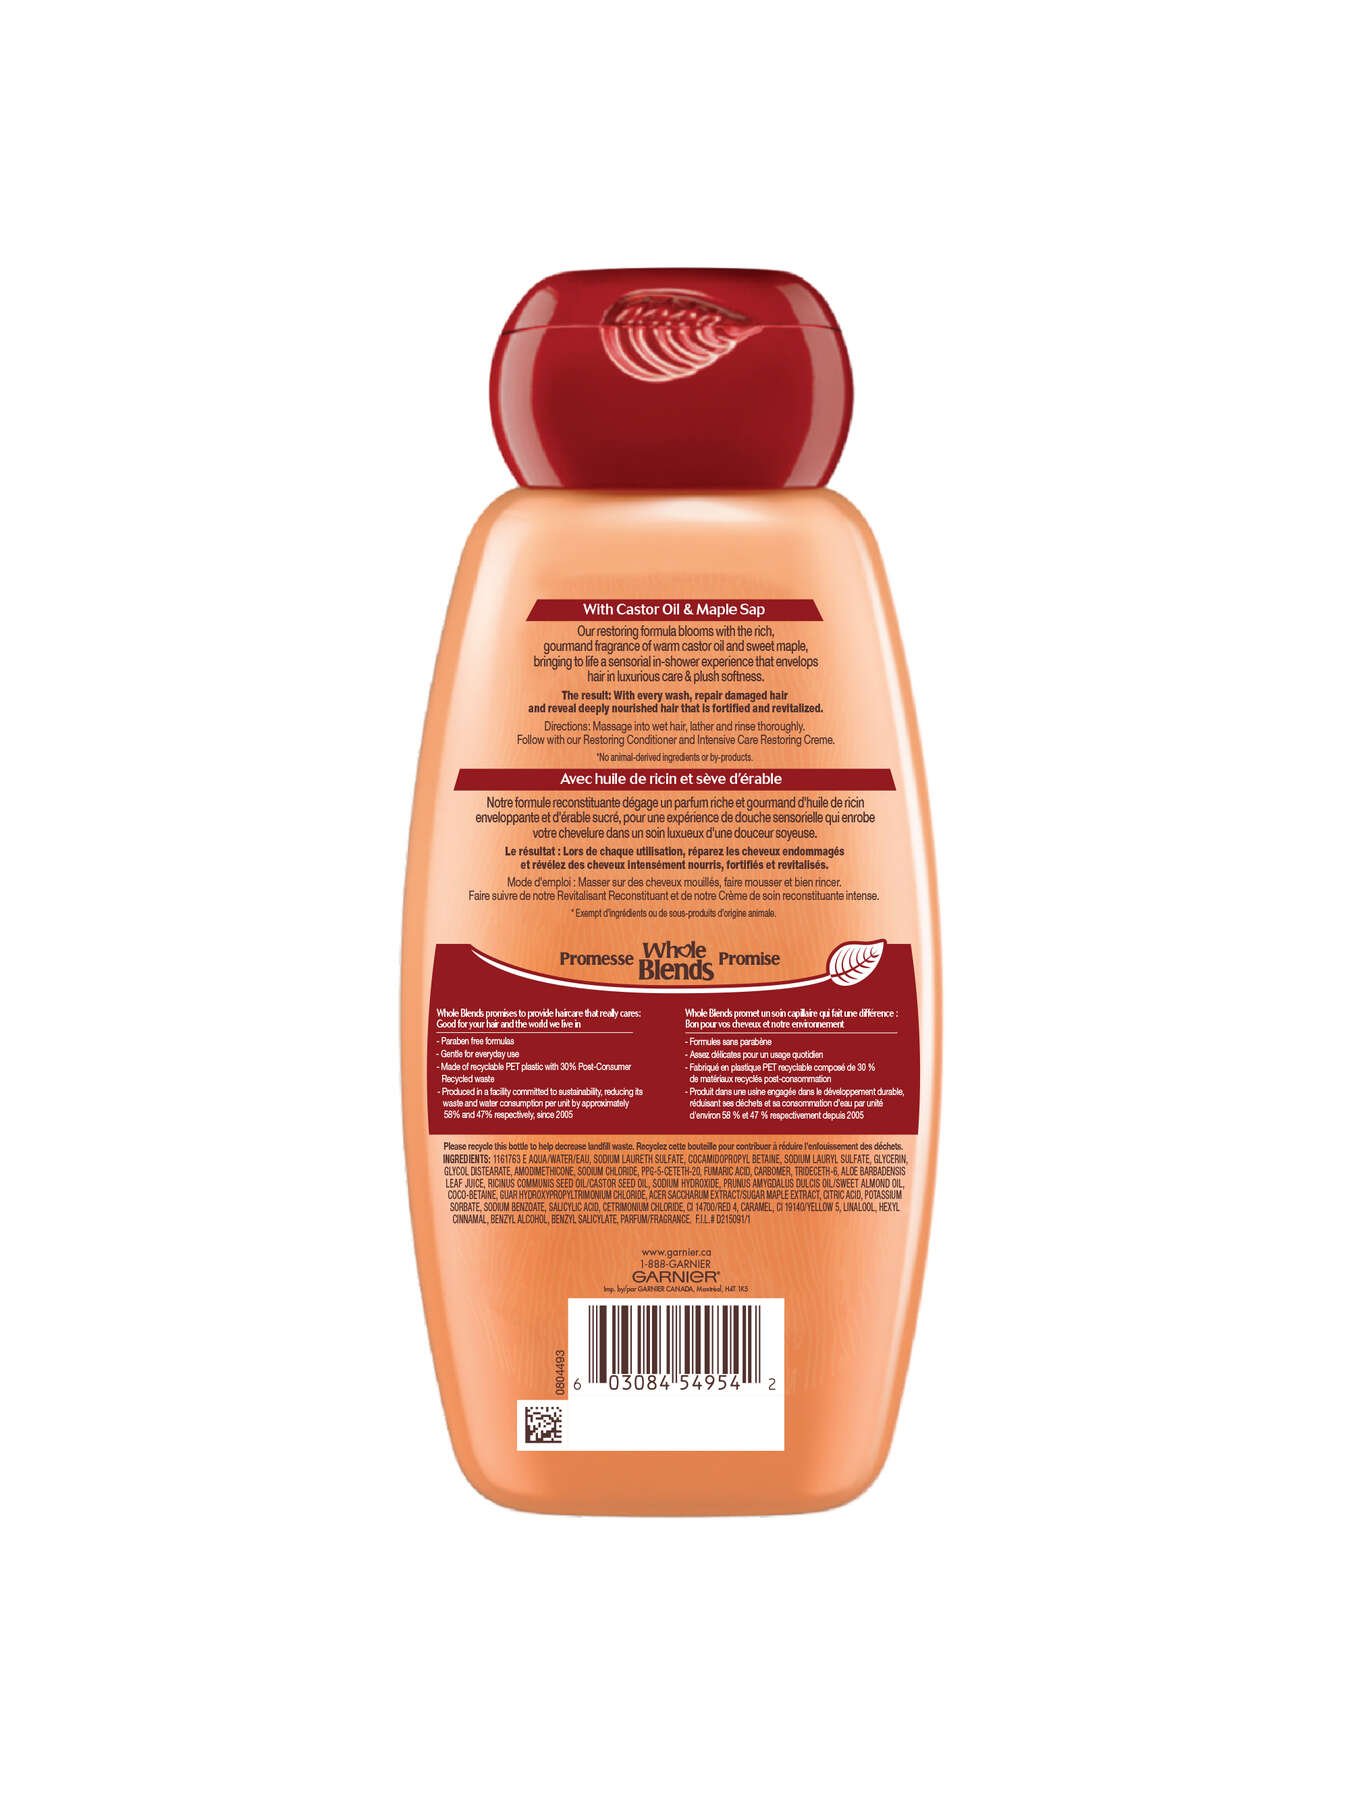 garnier shampoo whole blends castor oil remedy 370 ml 0603084549542 t2